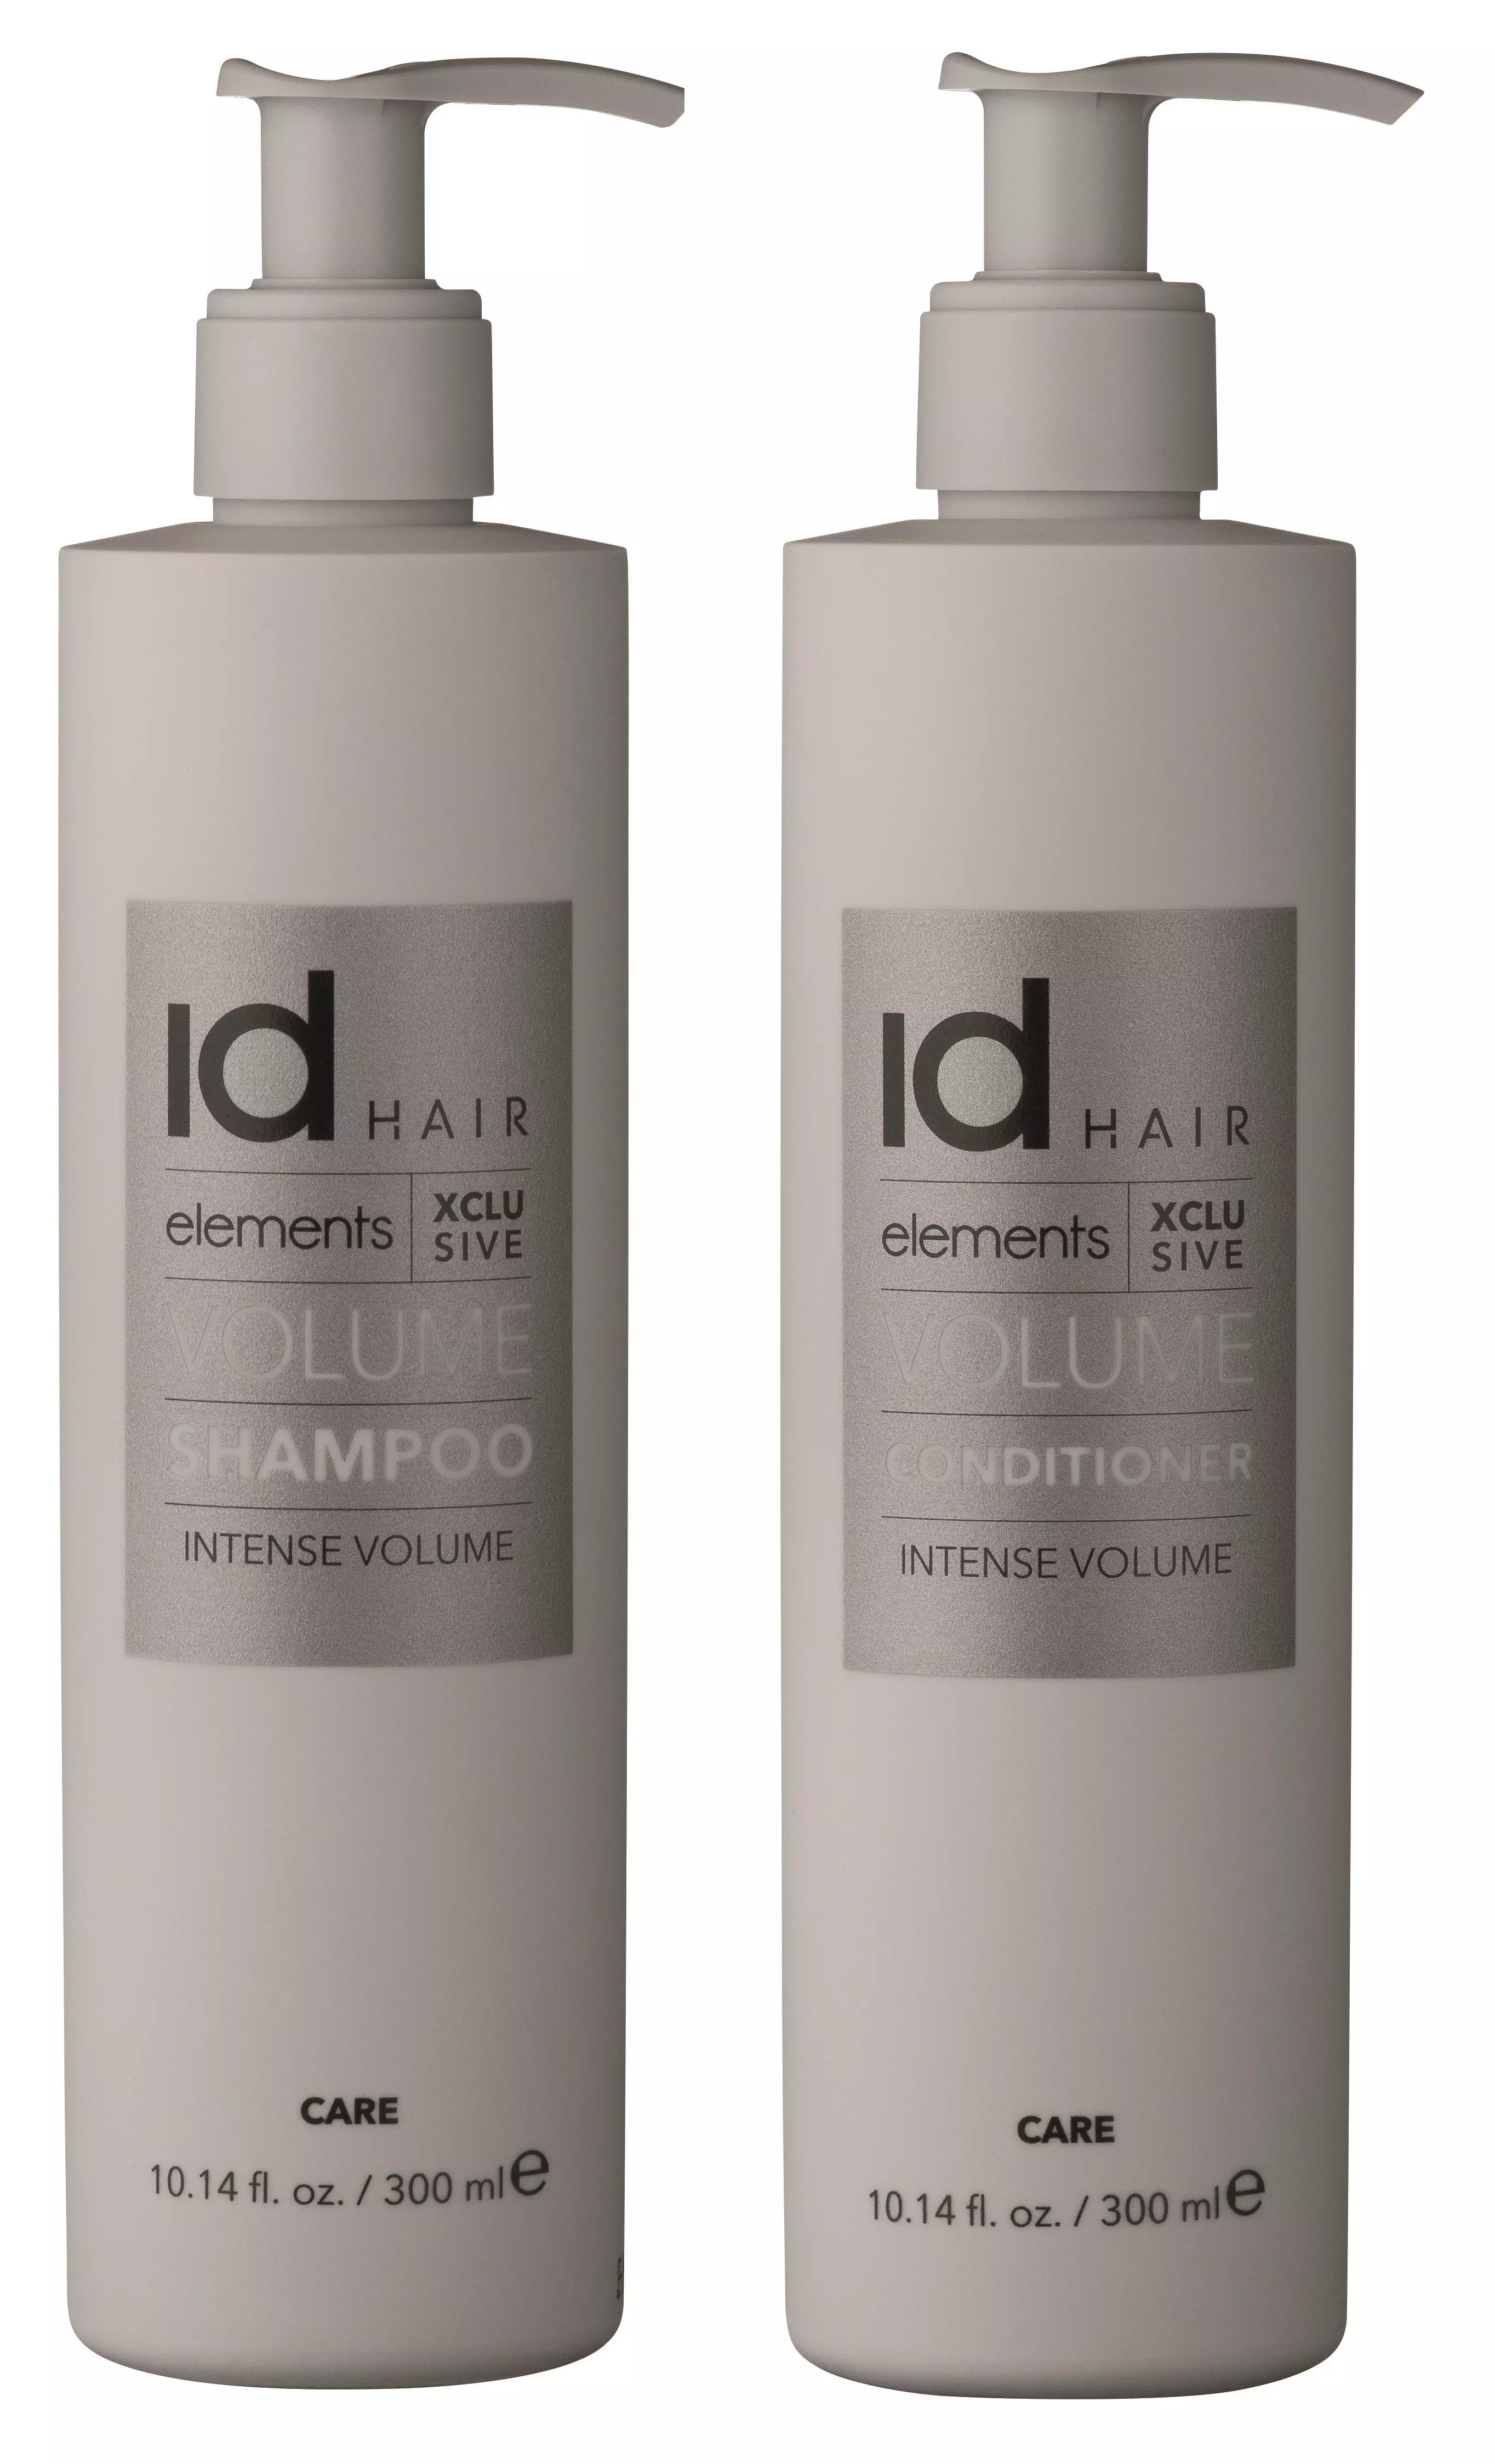 Idhair Elements Xclusive Volume Shampoo Ml